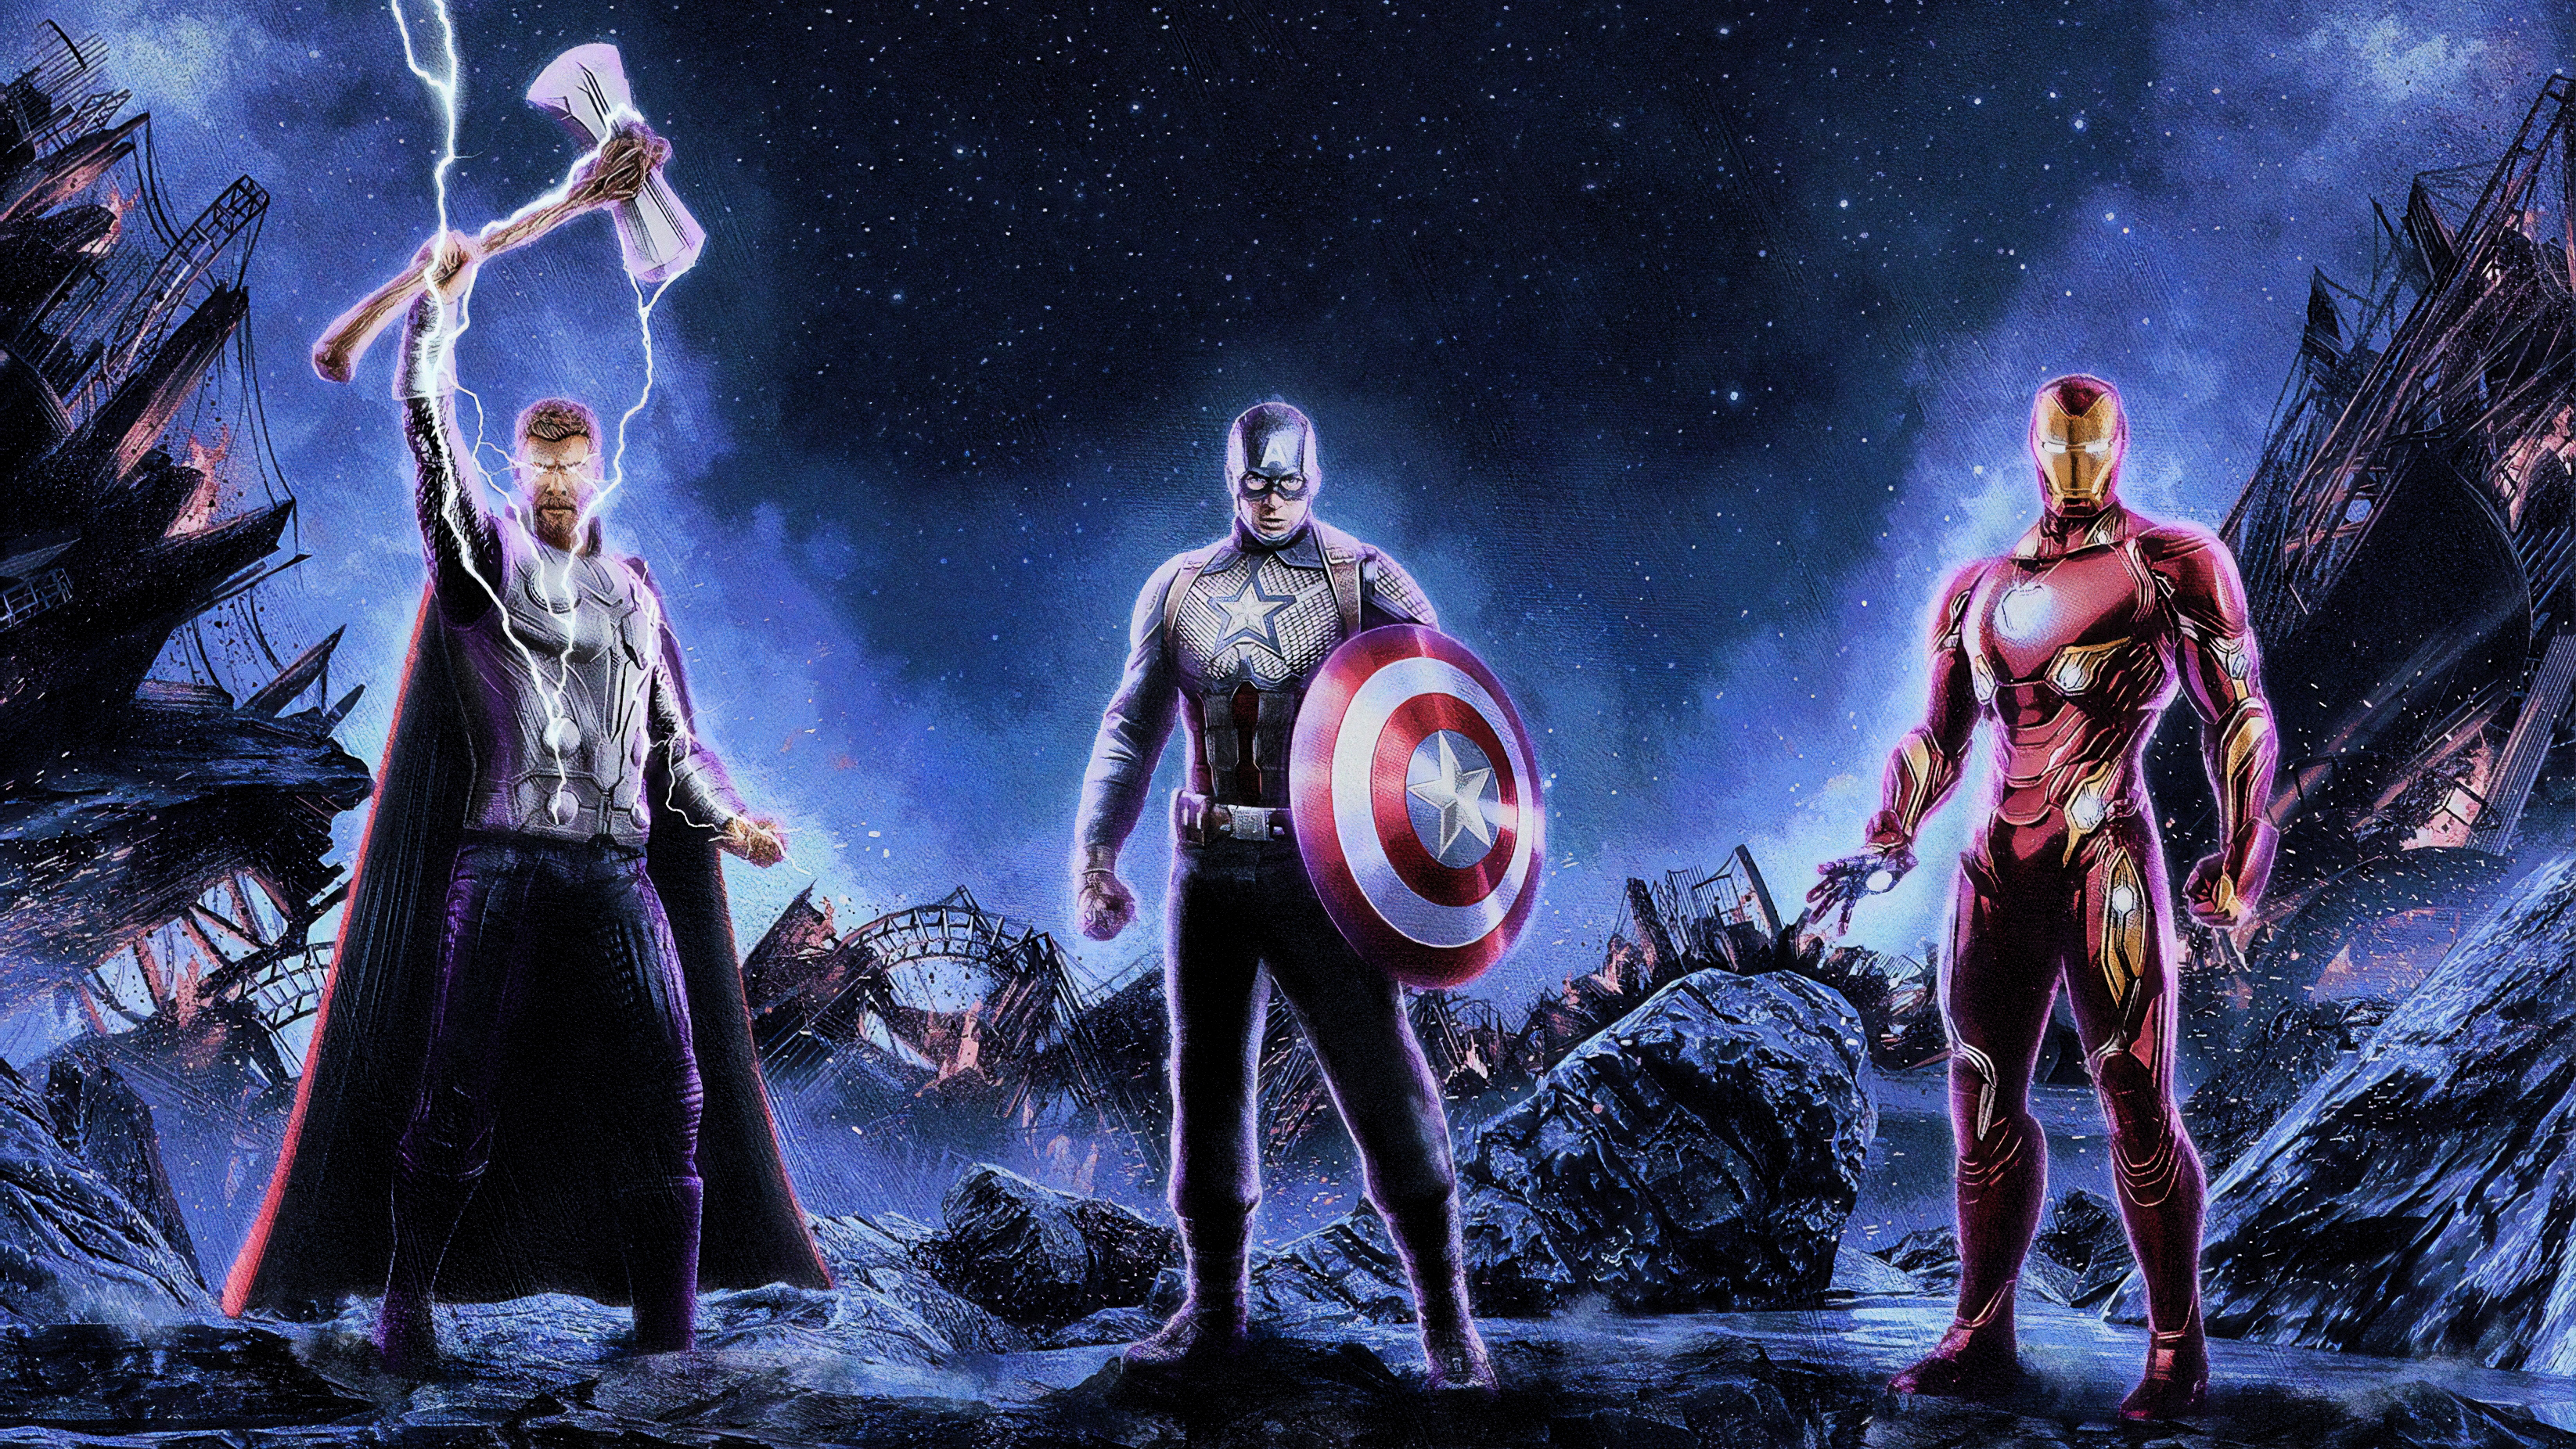 avengers endgame, thor, iron man, captain america, 4k, 2019 movies, movies, hd, 4k, poster, superheroes